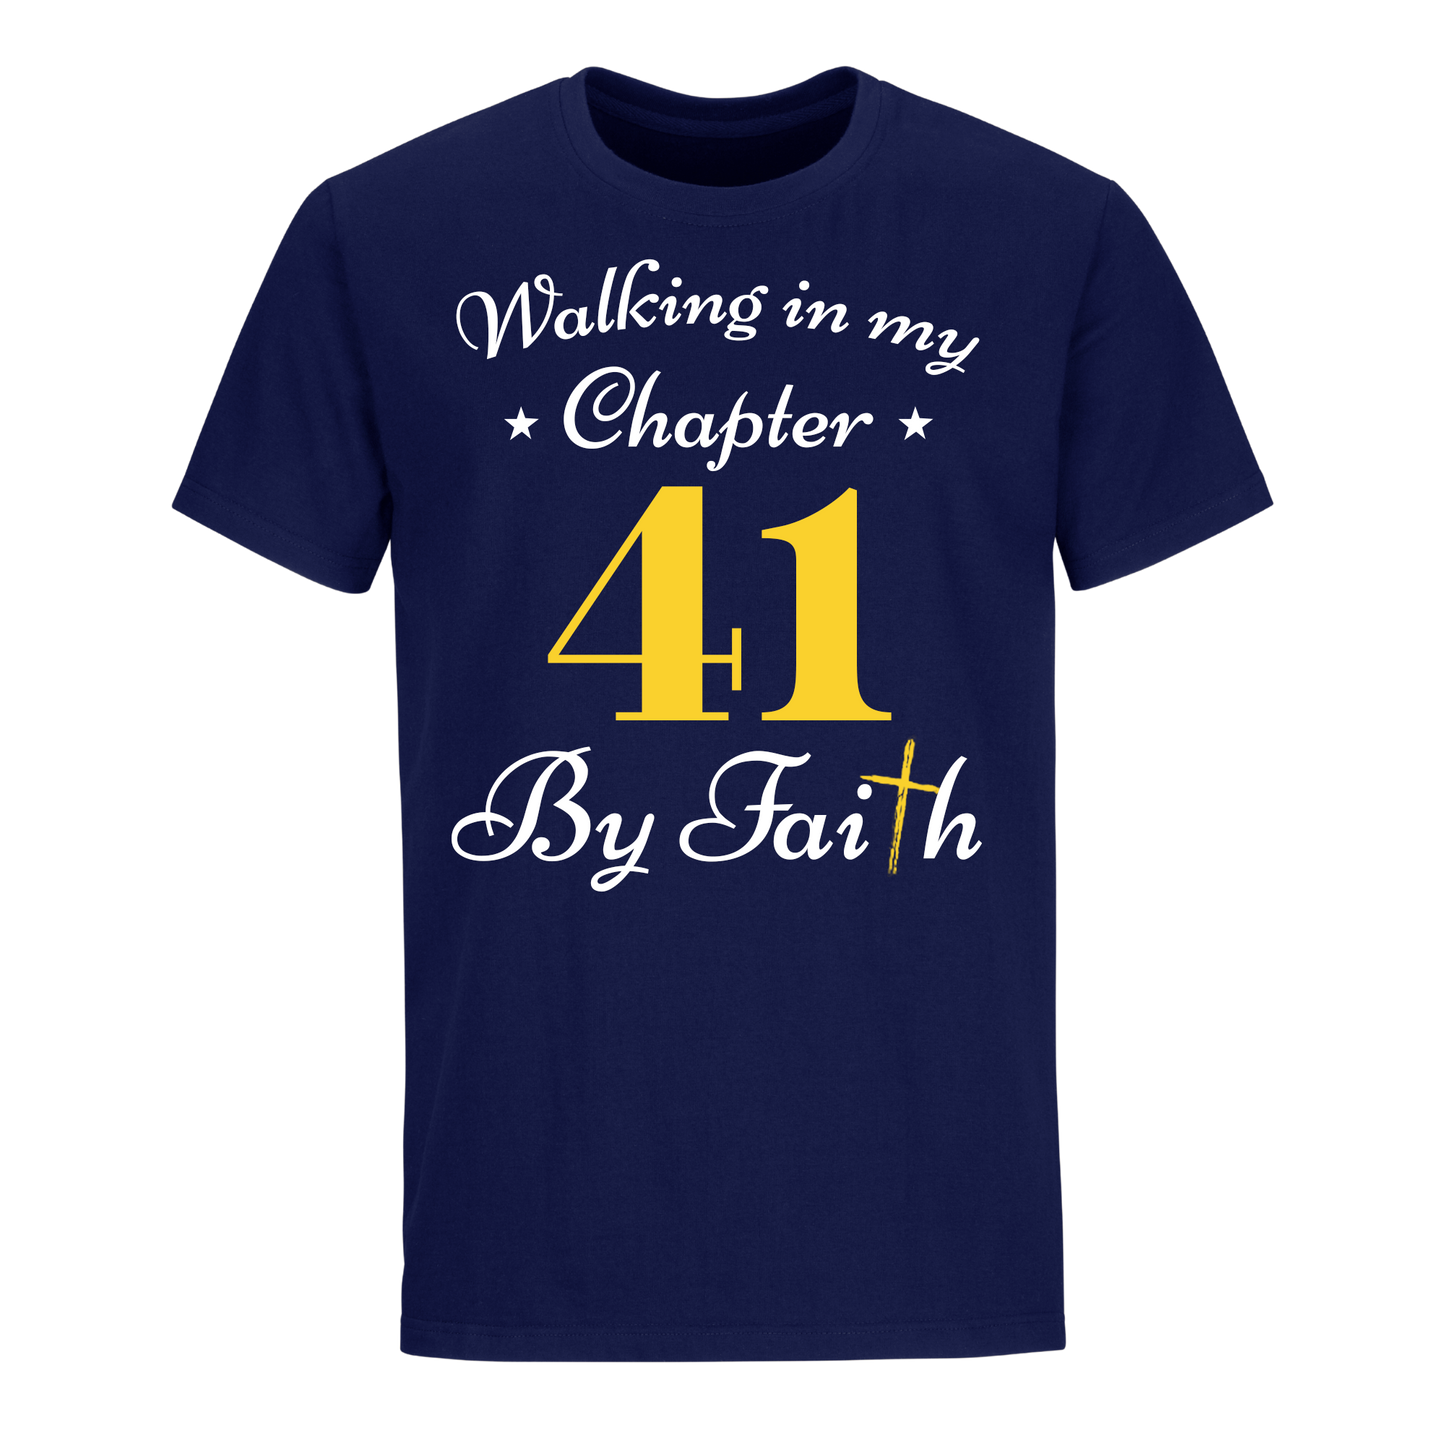 WALKING CHAPTER 41 BY FAITH UNISEX SHIRT